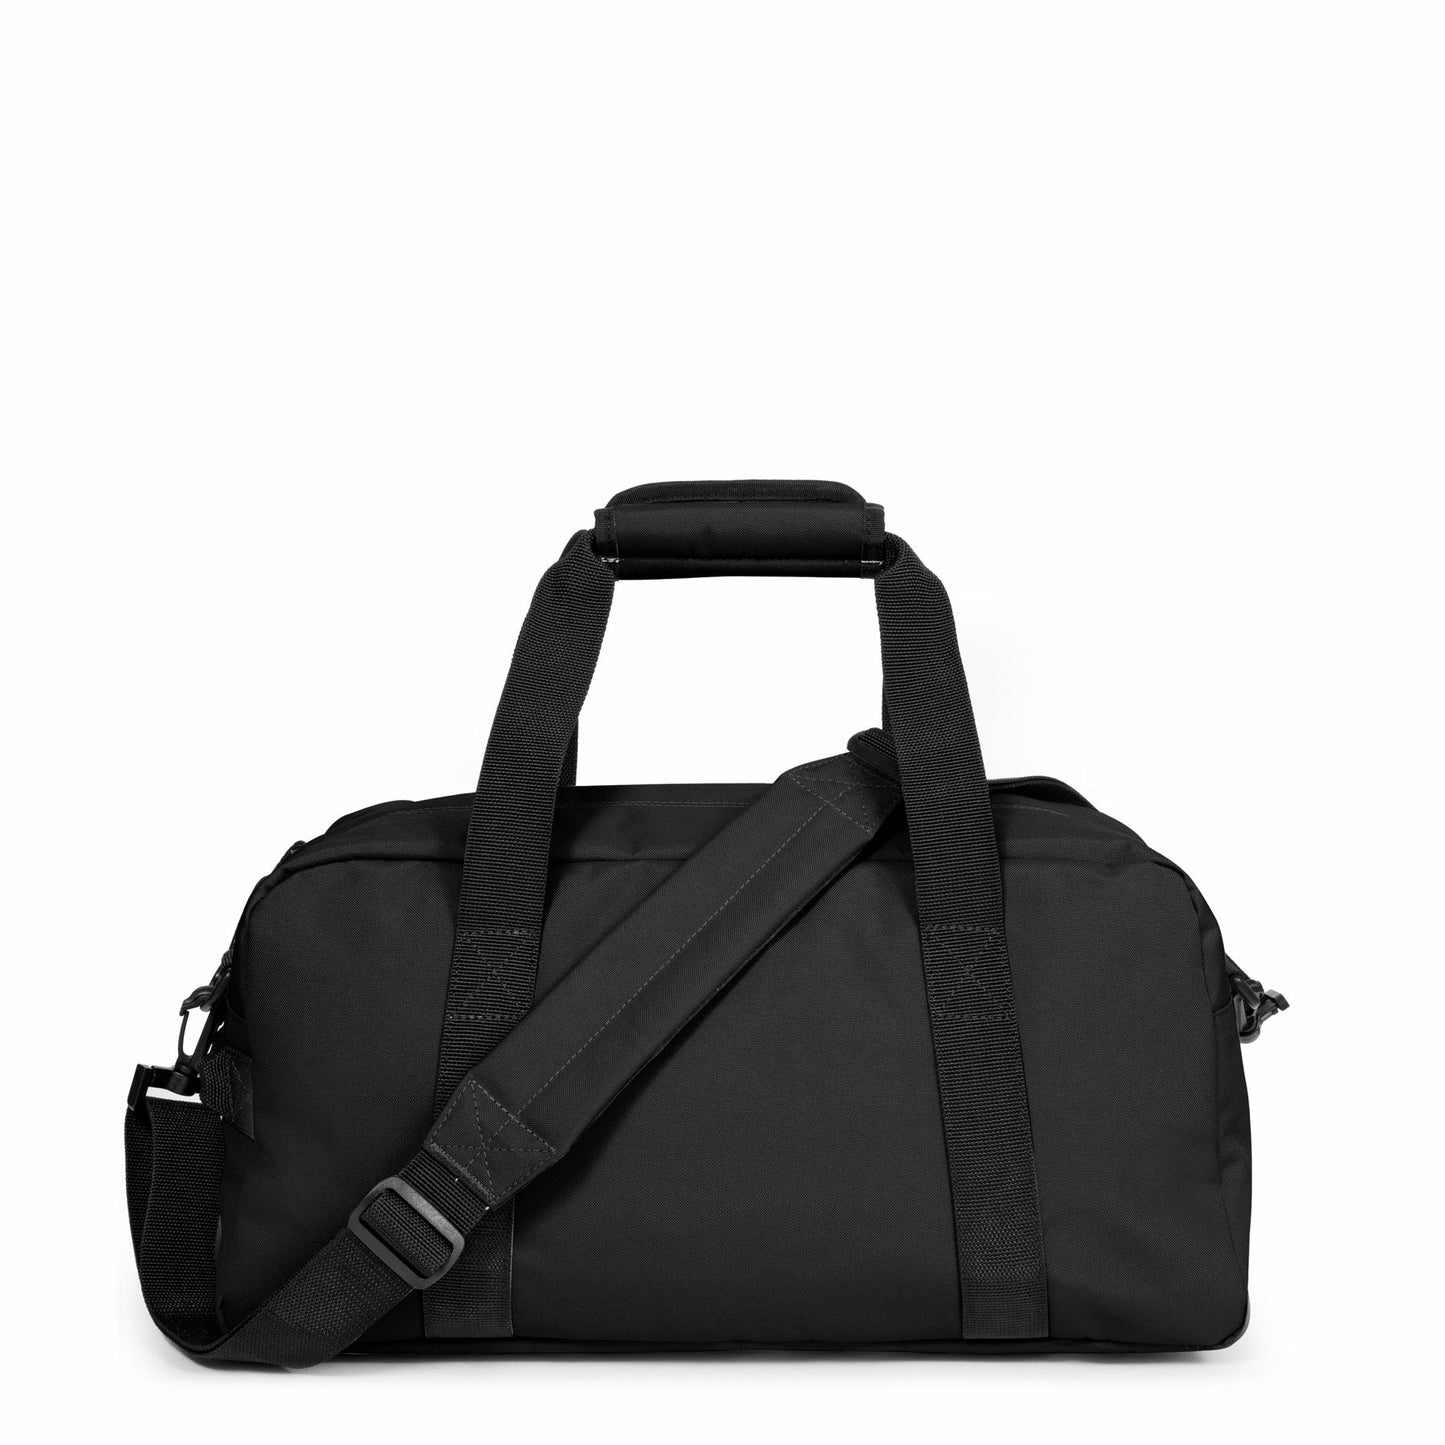 EastPak Compact Duffel Bag Black